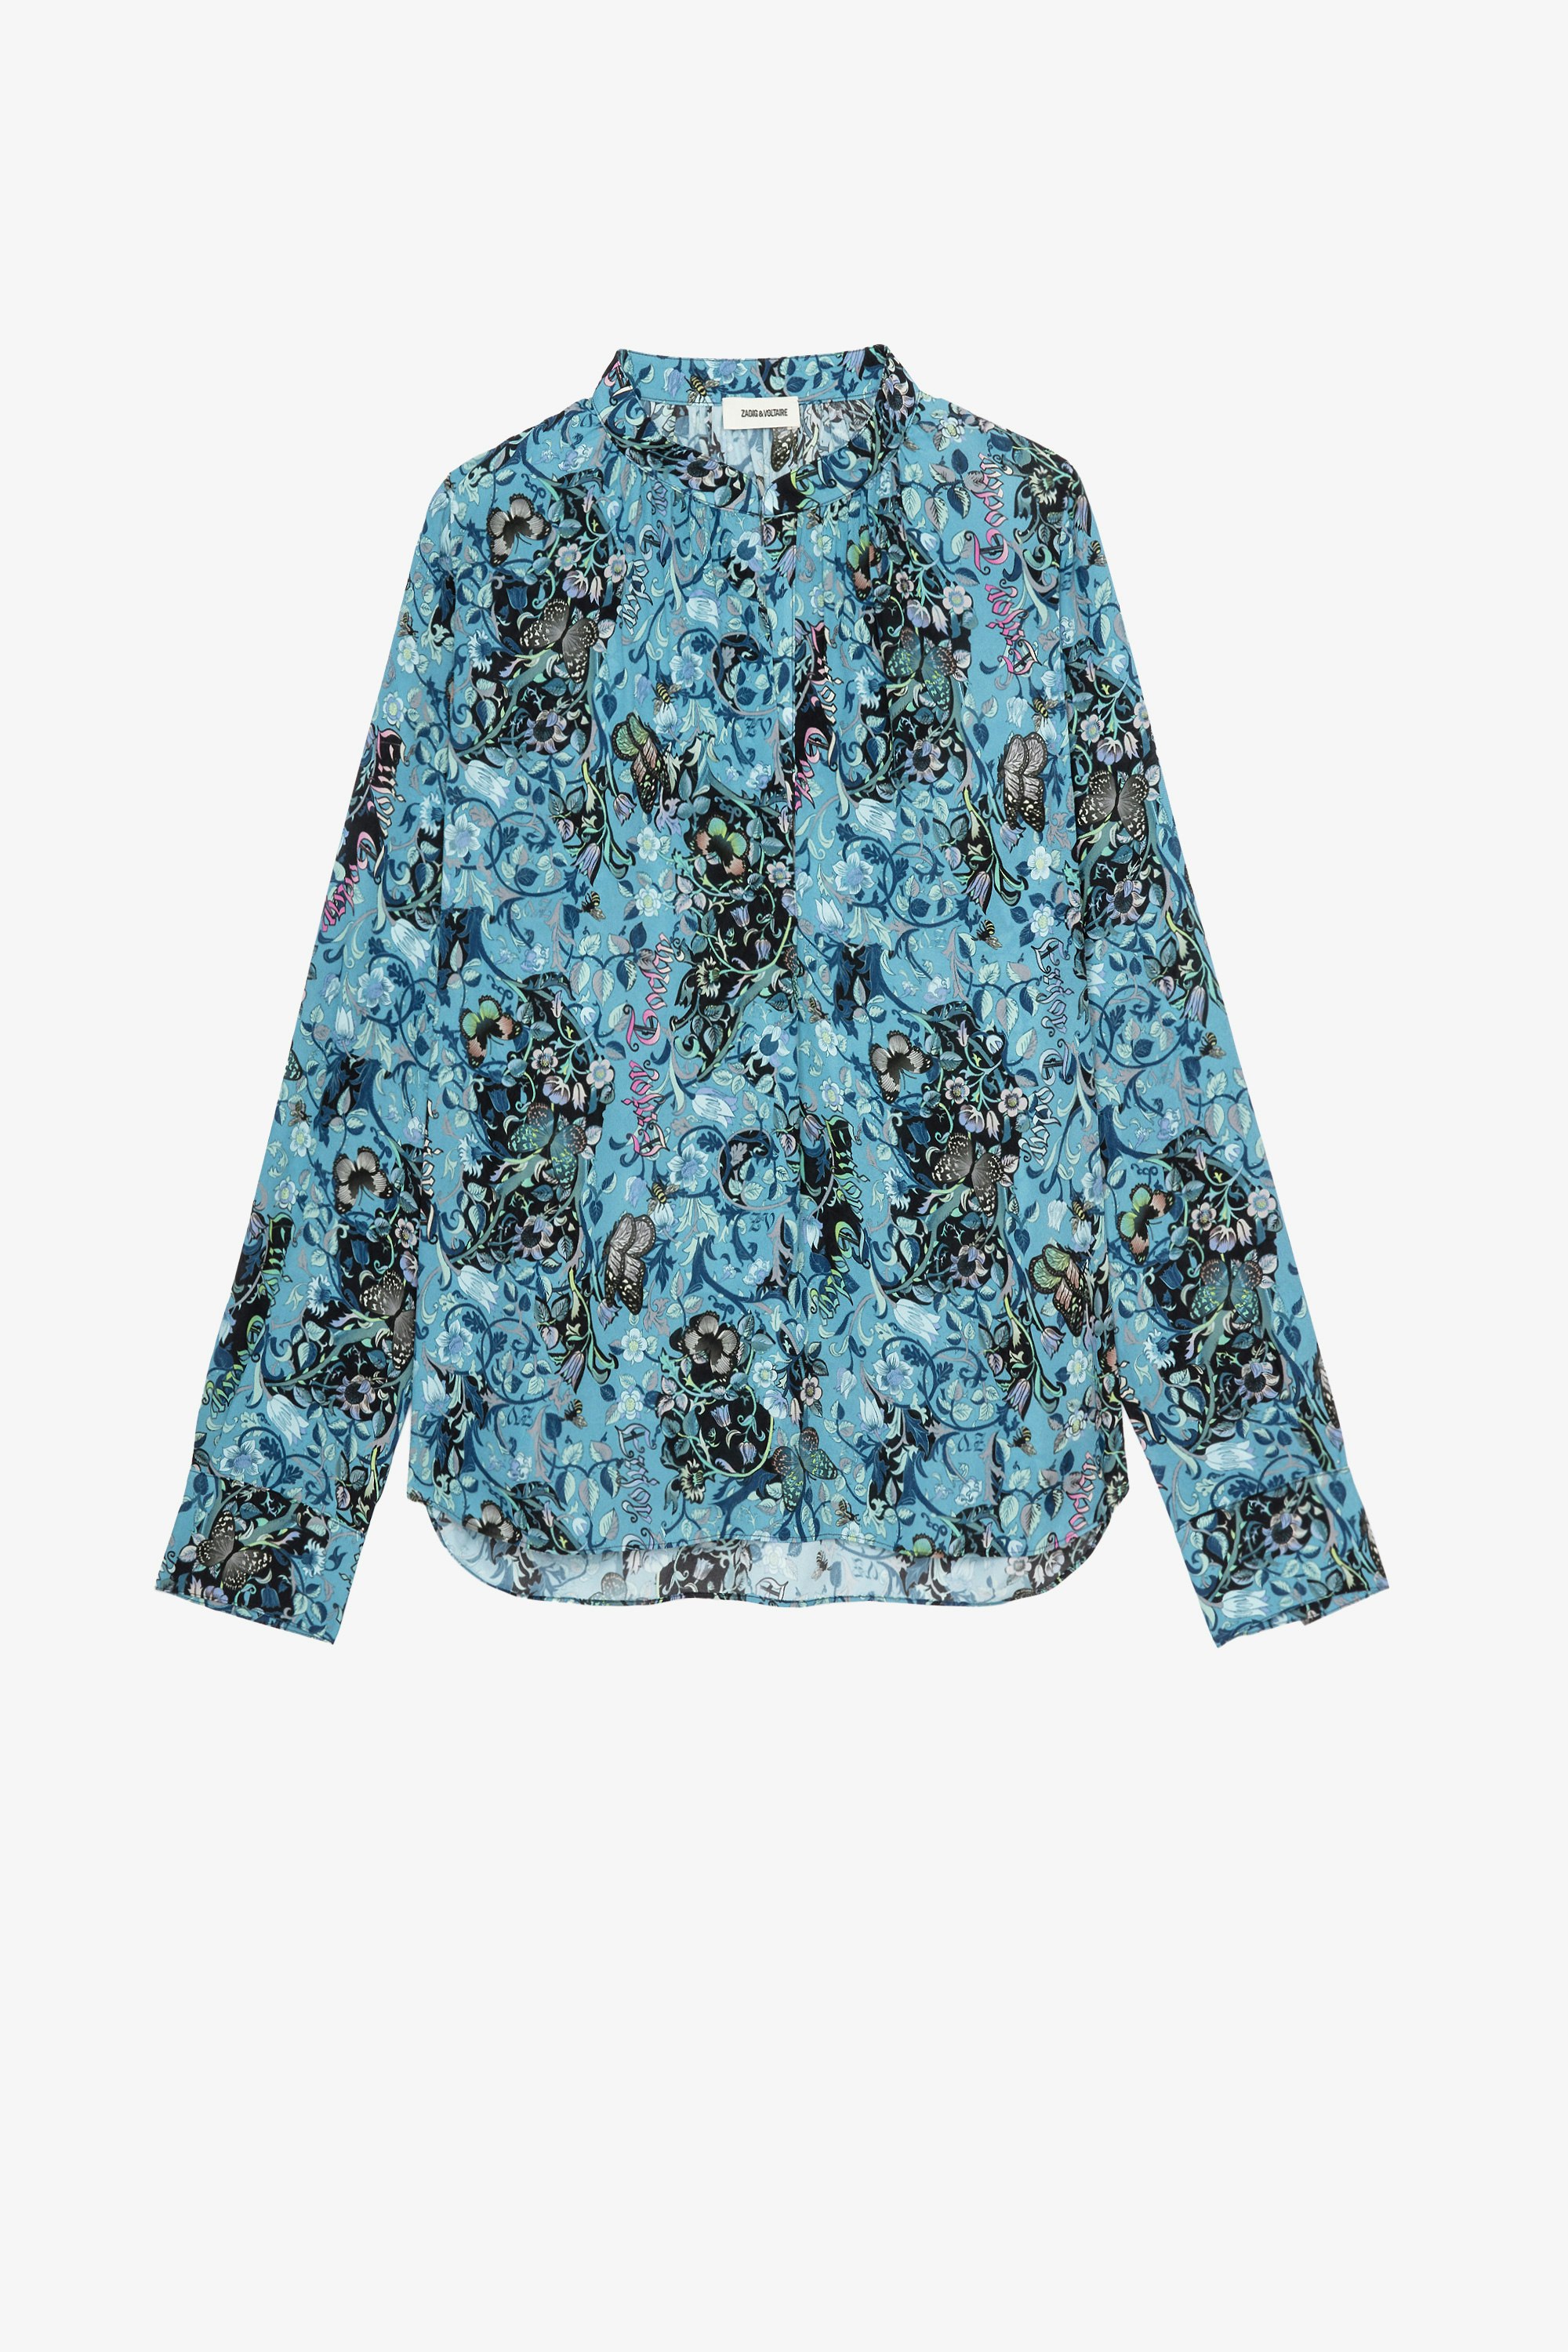 Camisa Tink Bohemian Camisa de satén azul con estampado floral para mujer 